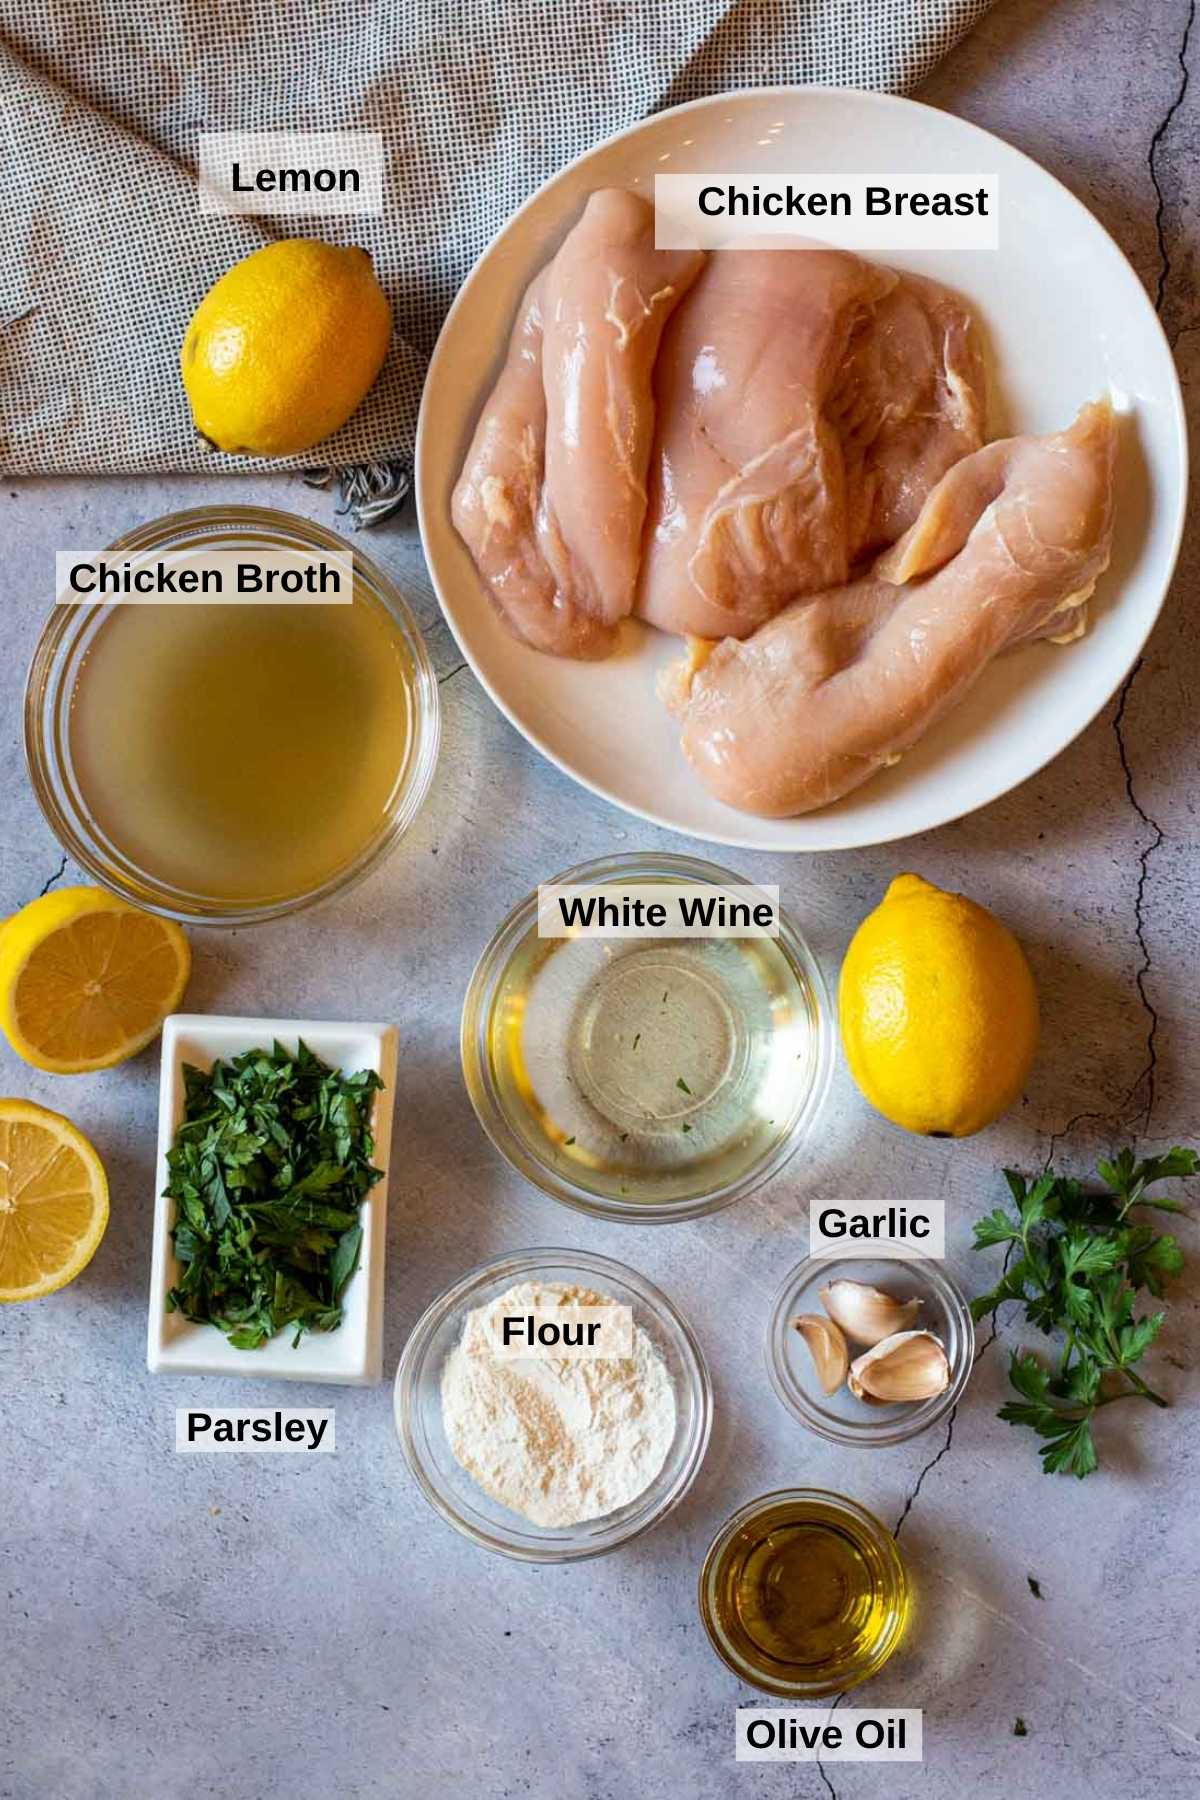 Ingredients to make lemon garlic chicken breast.